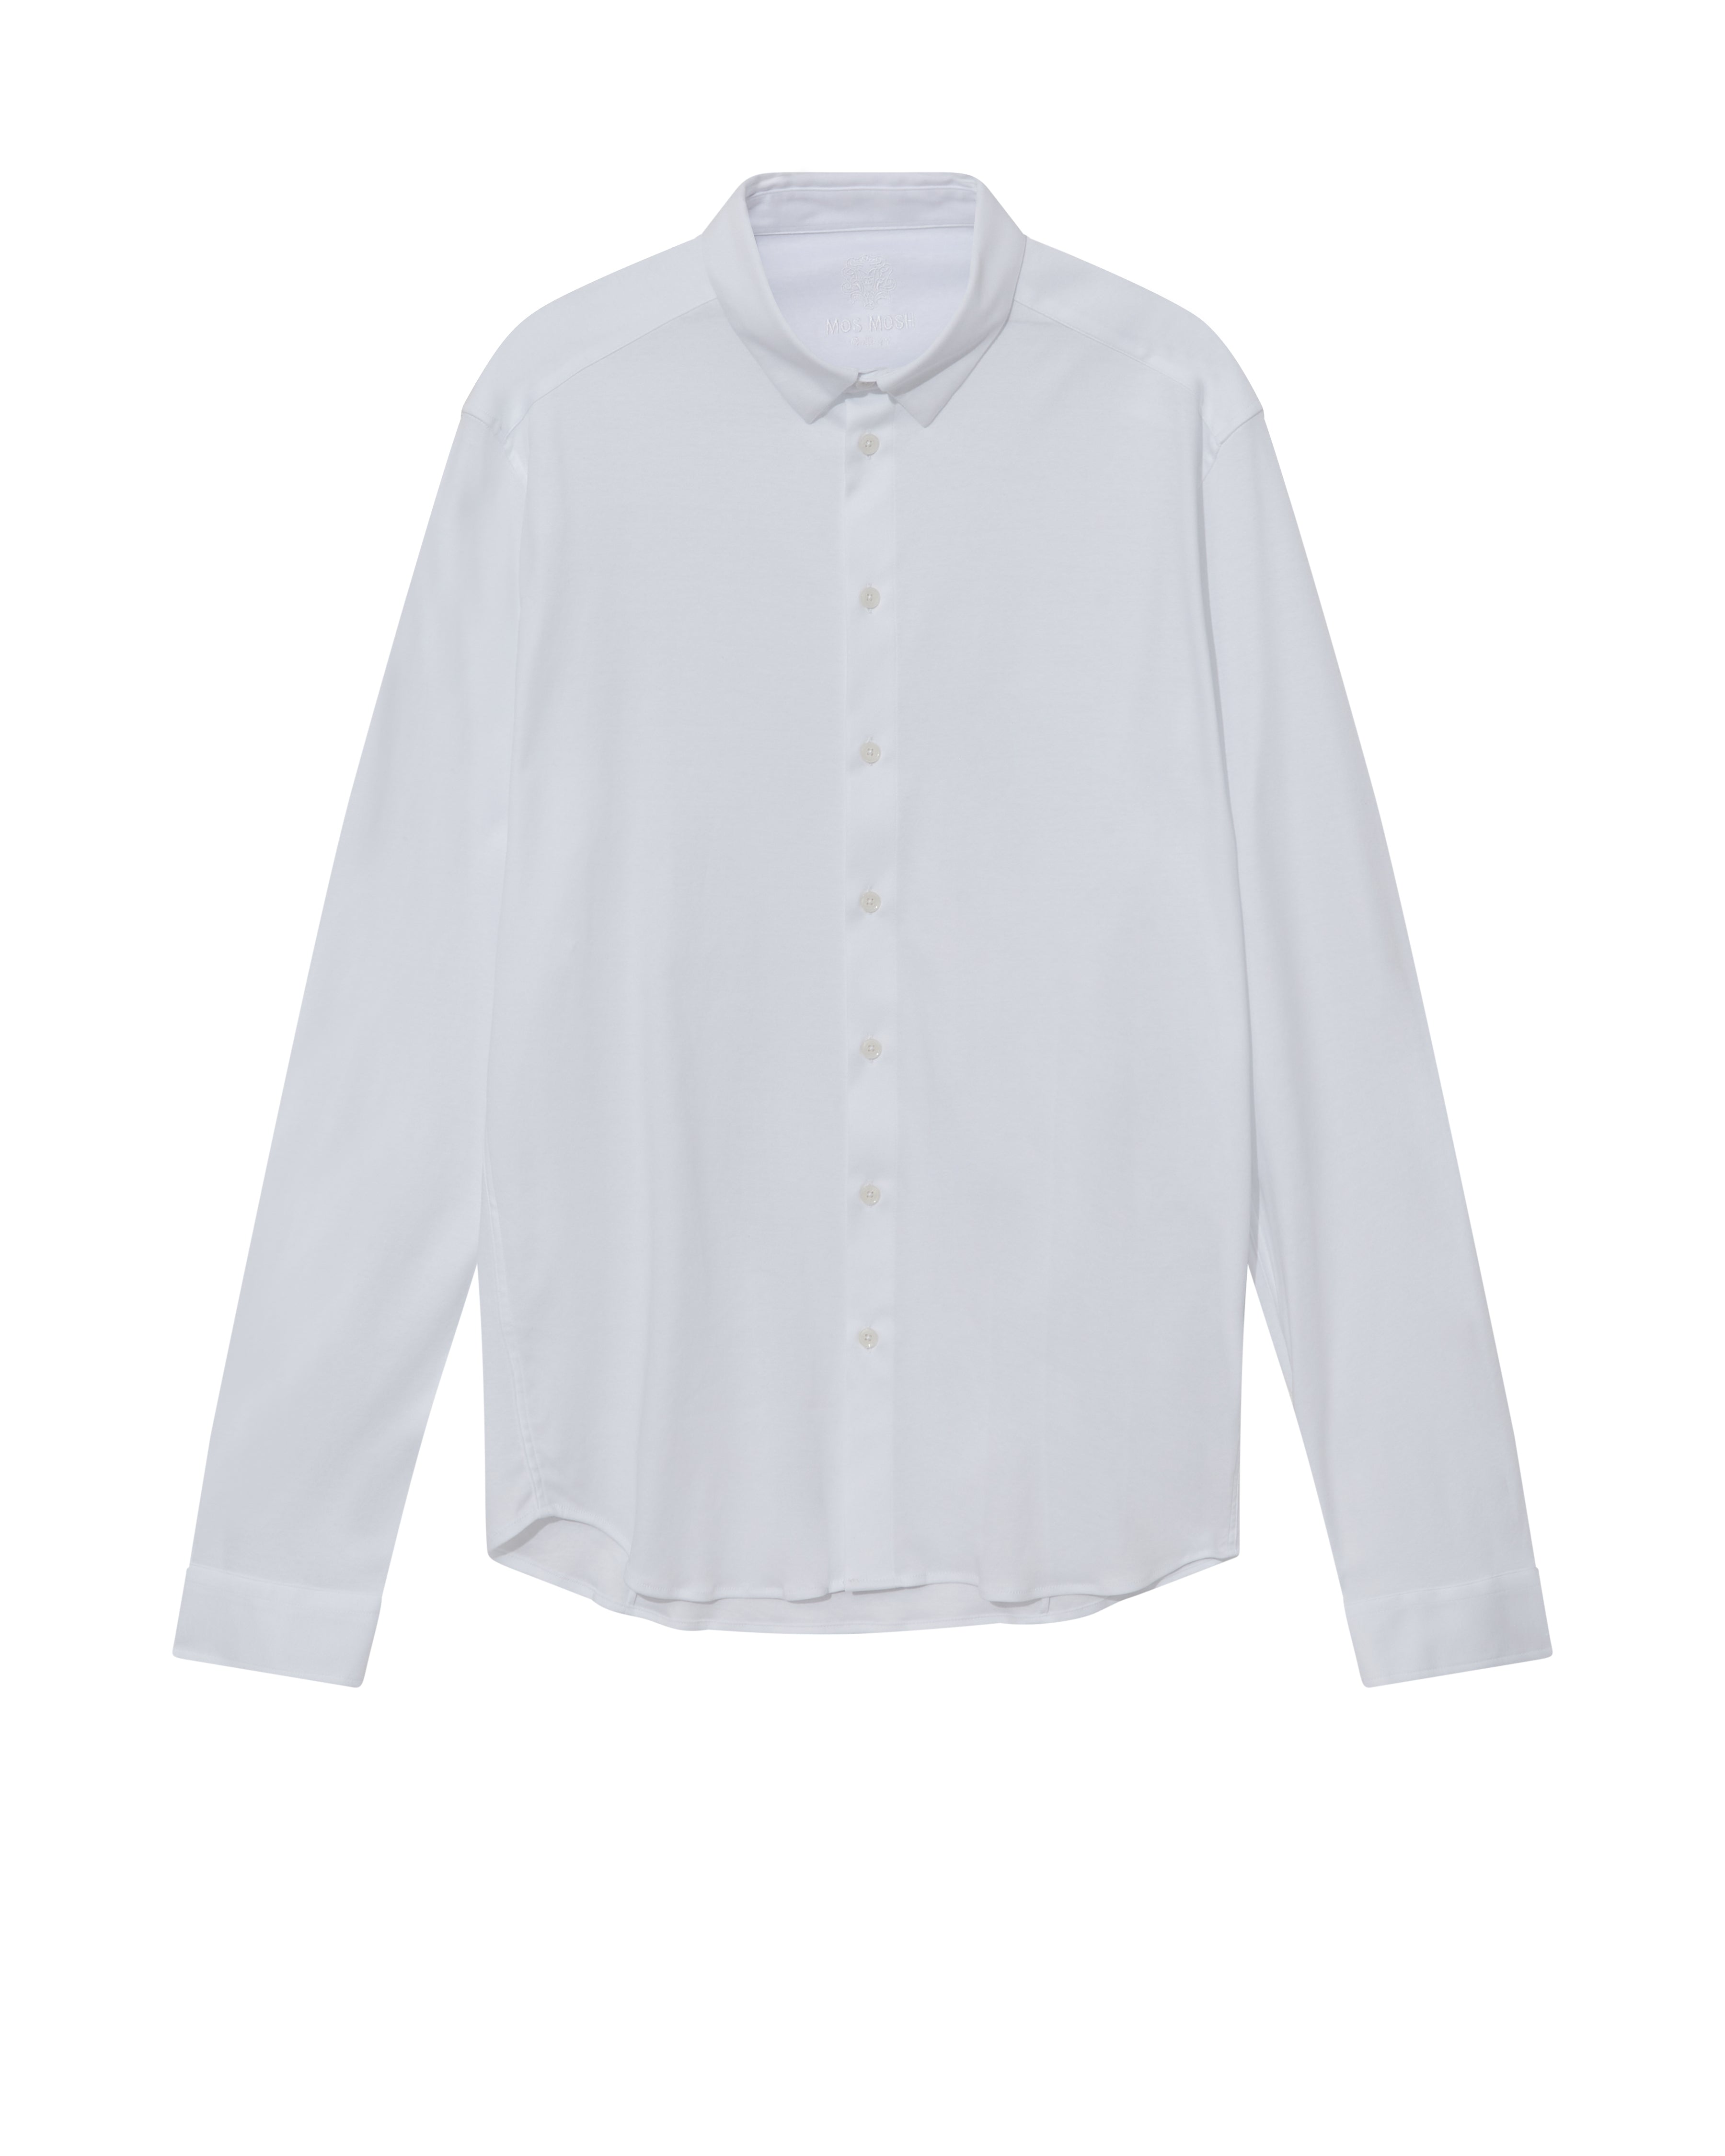 Marco Crunch Jersey Shirt - White